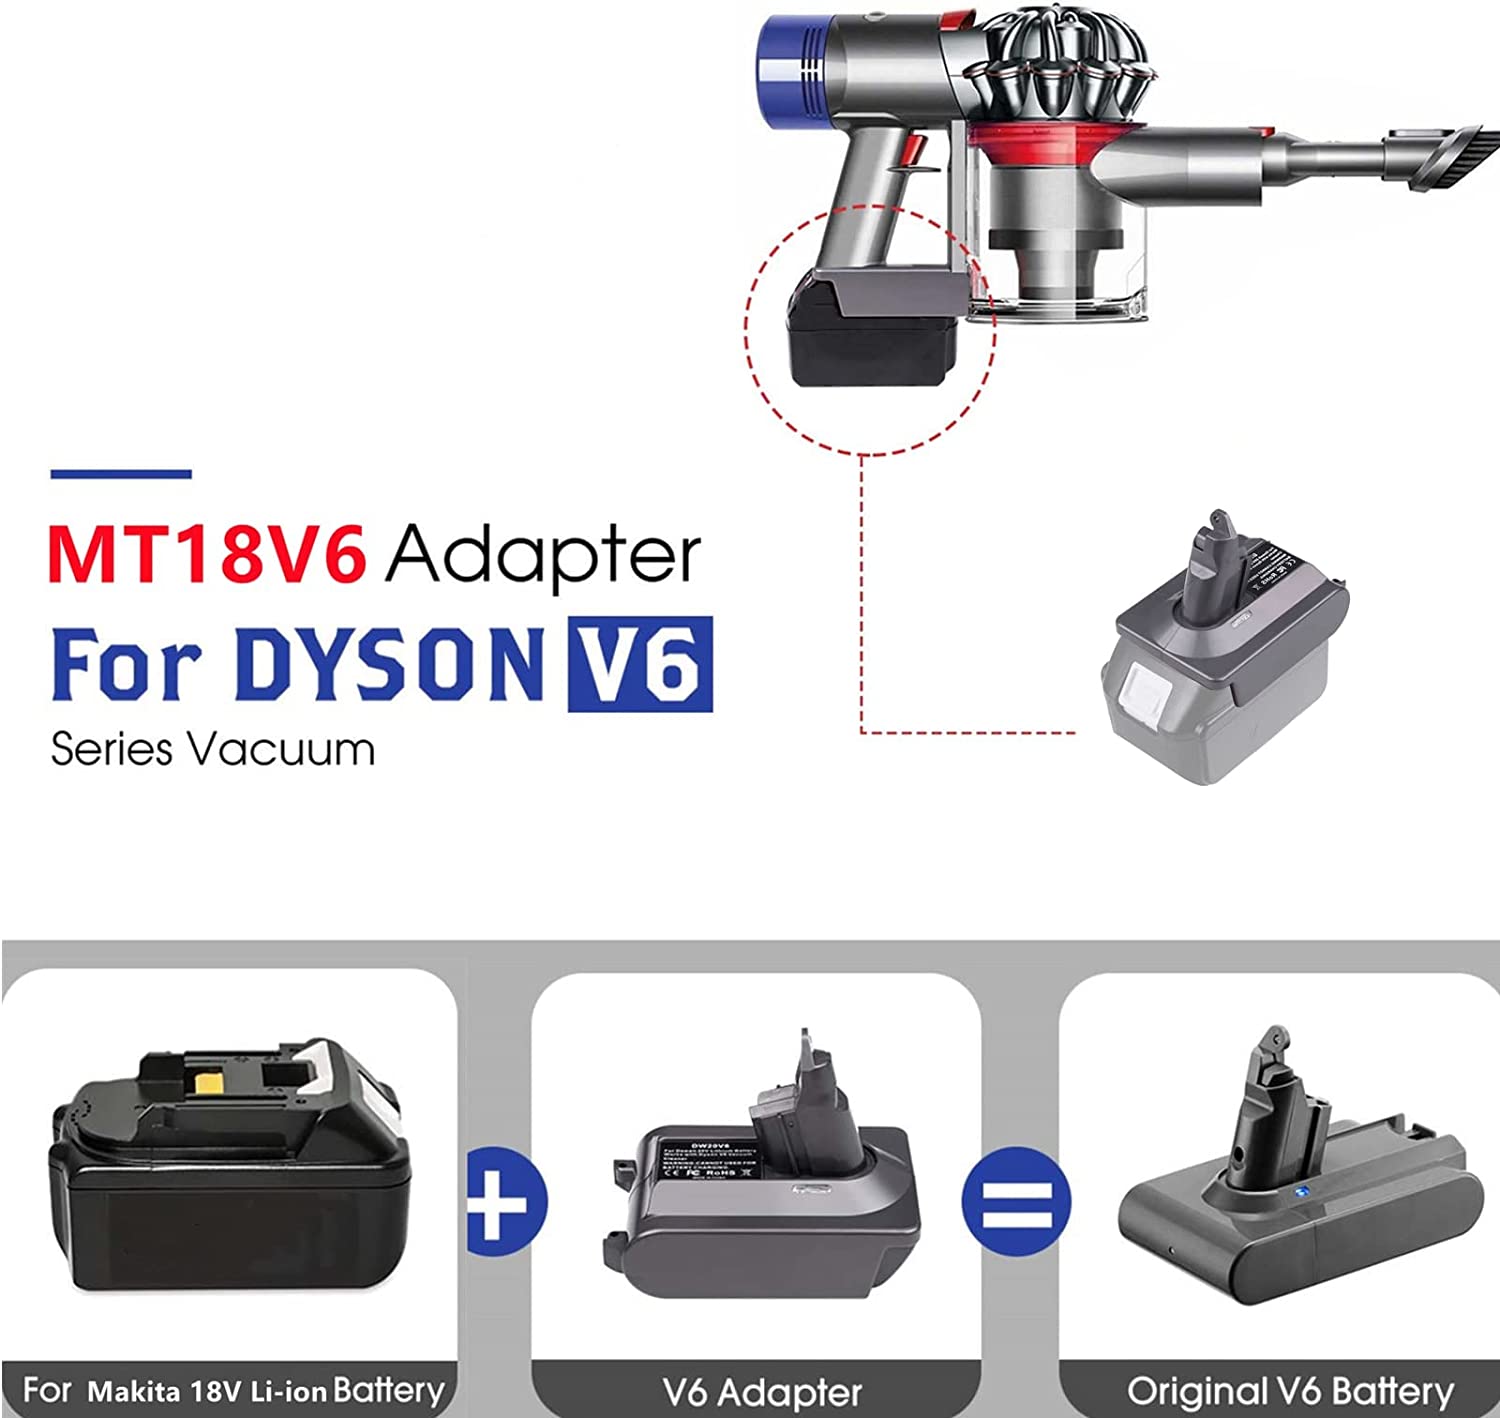 Adapter baterii Dyson V6 do baterii litowej Makita 18 V przekonwertowany na baterię Dyson V6